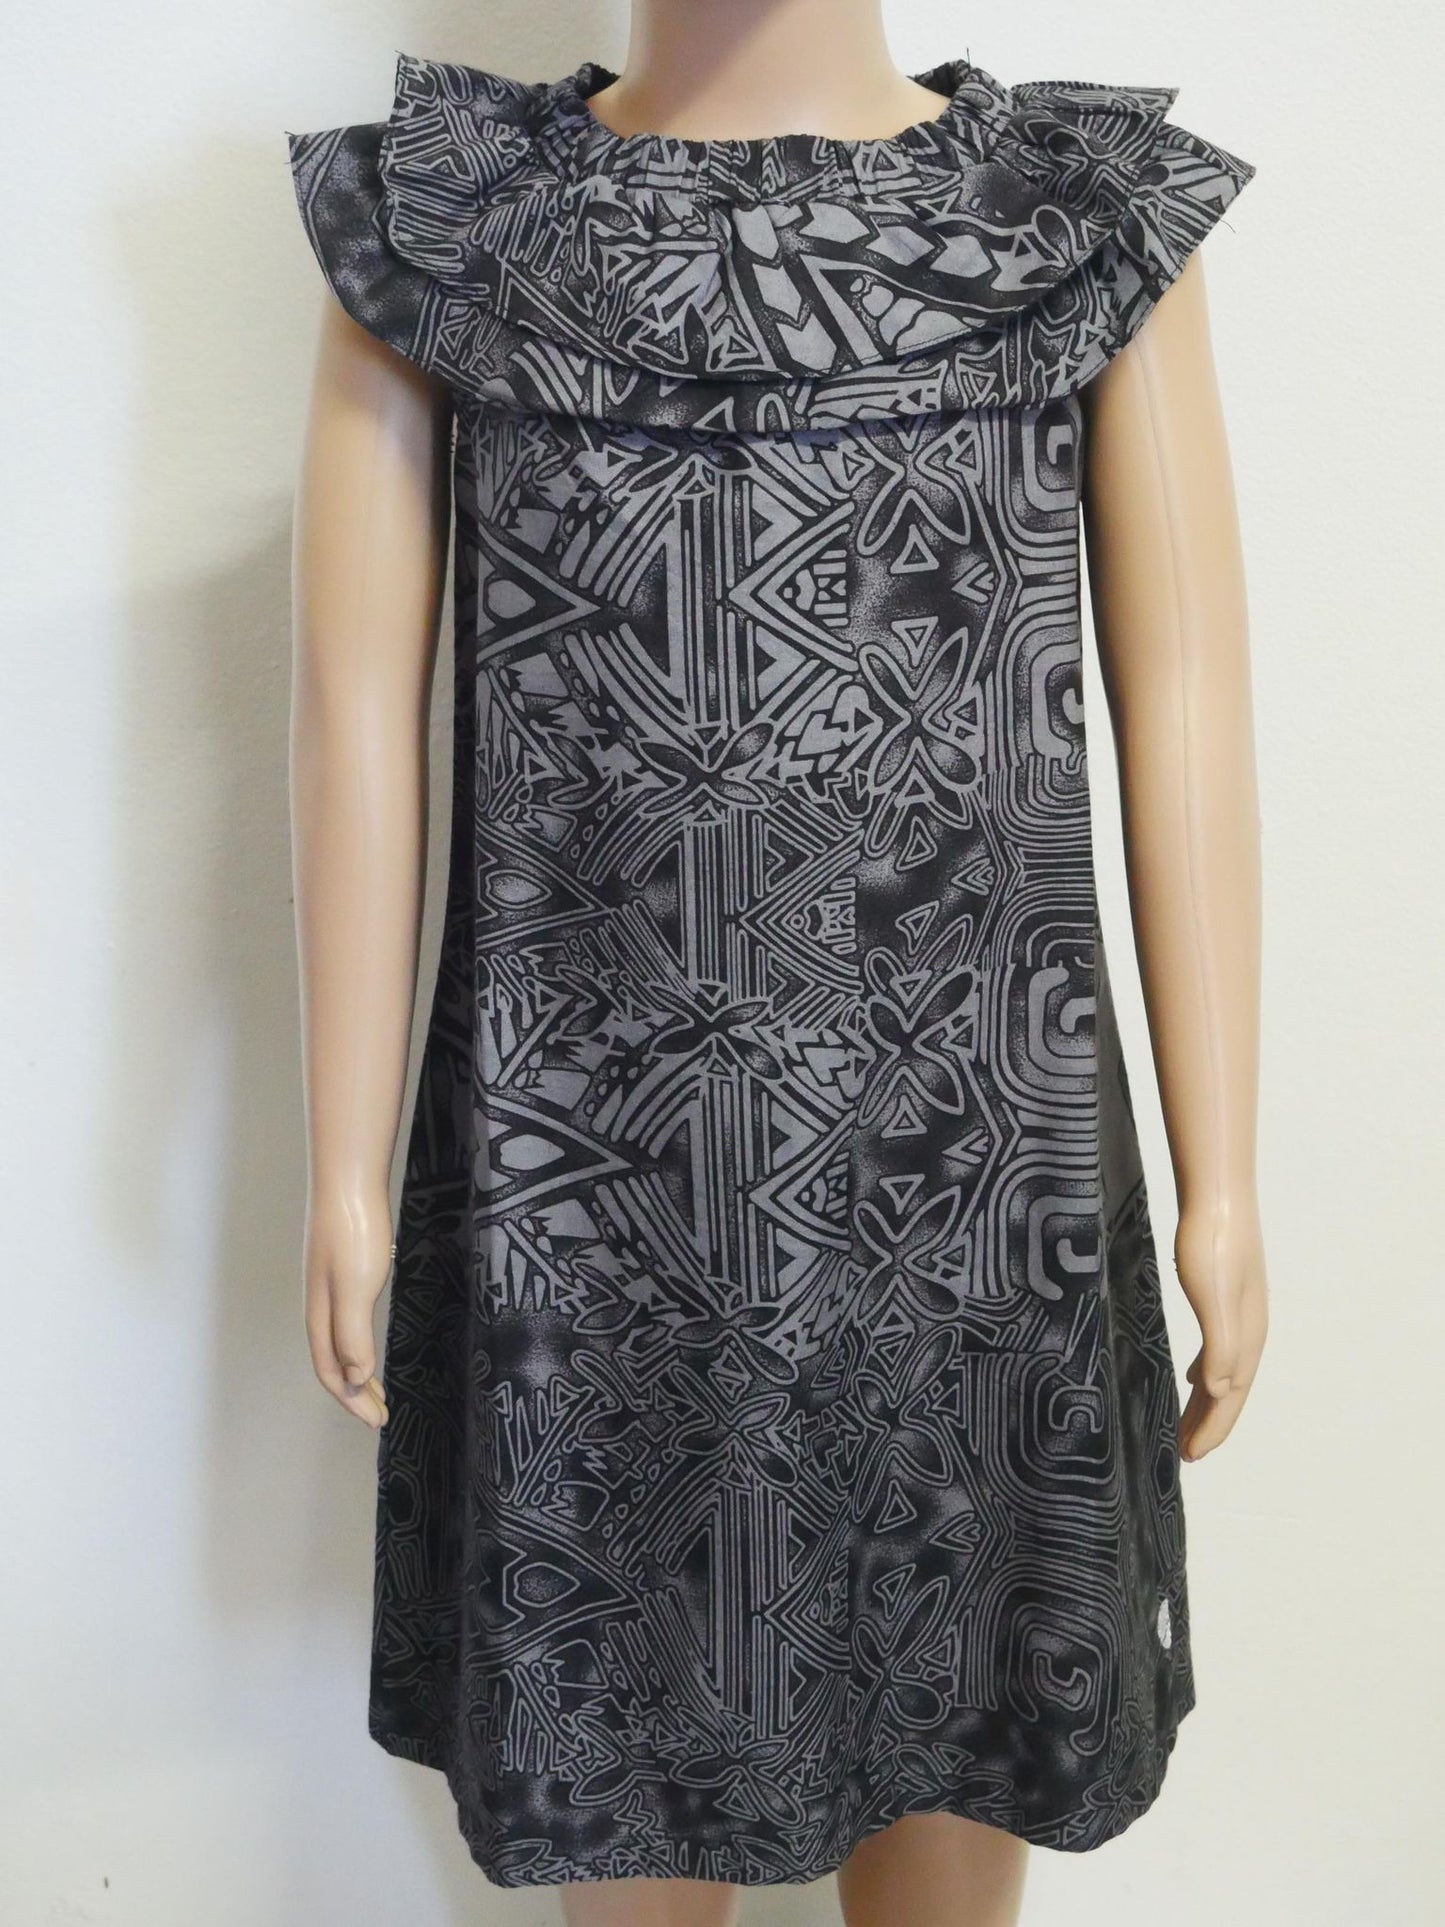 Tanoa Samoa Girl's Dress (Black & Grey)